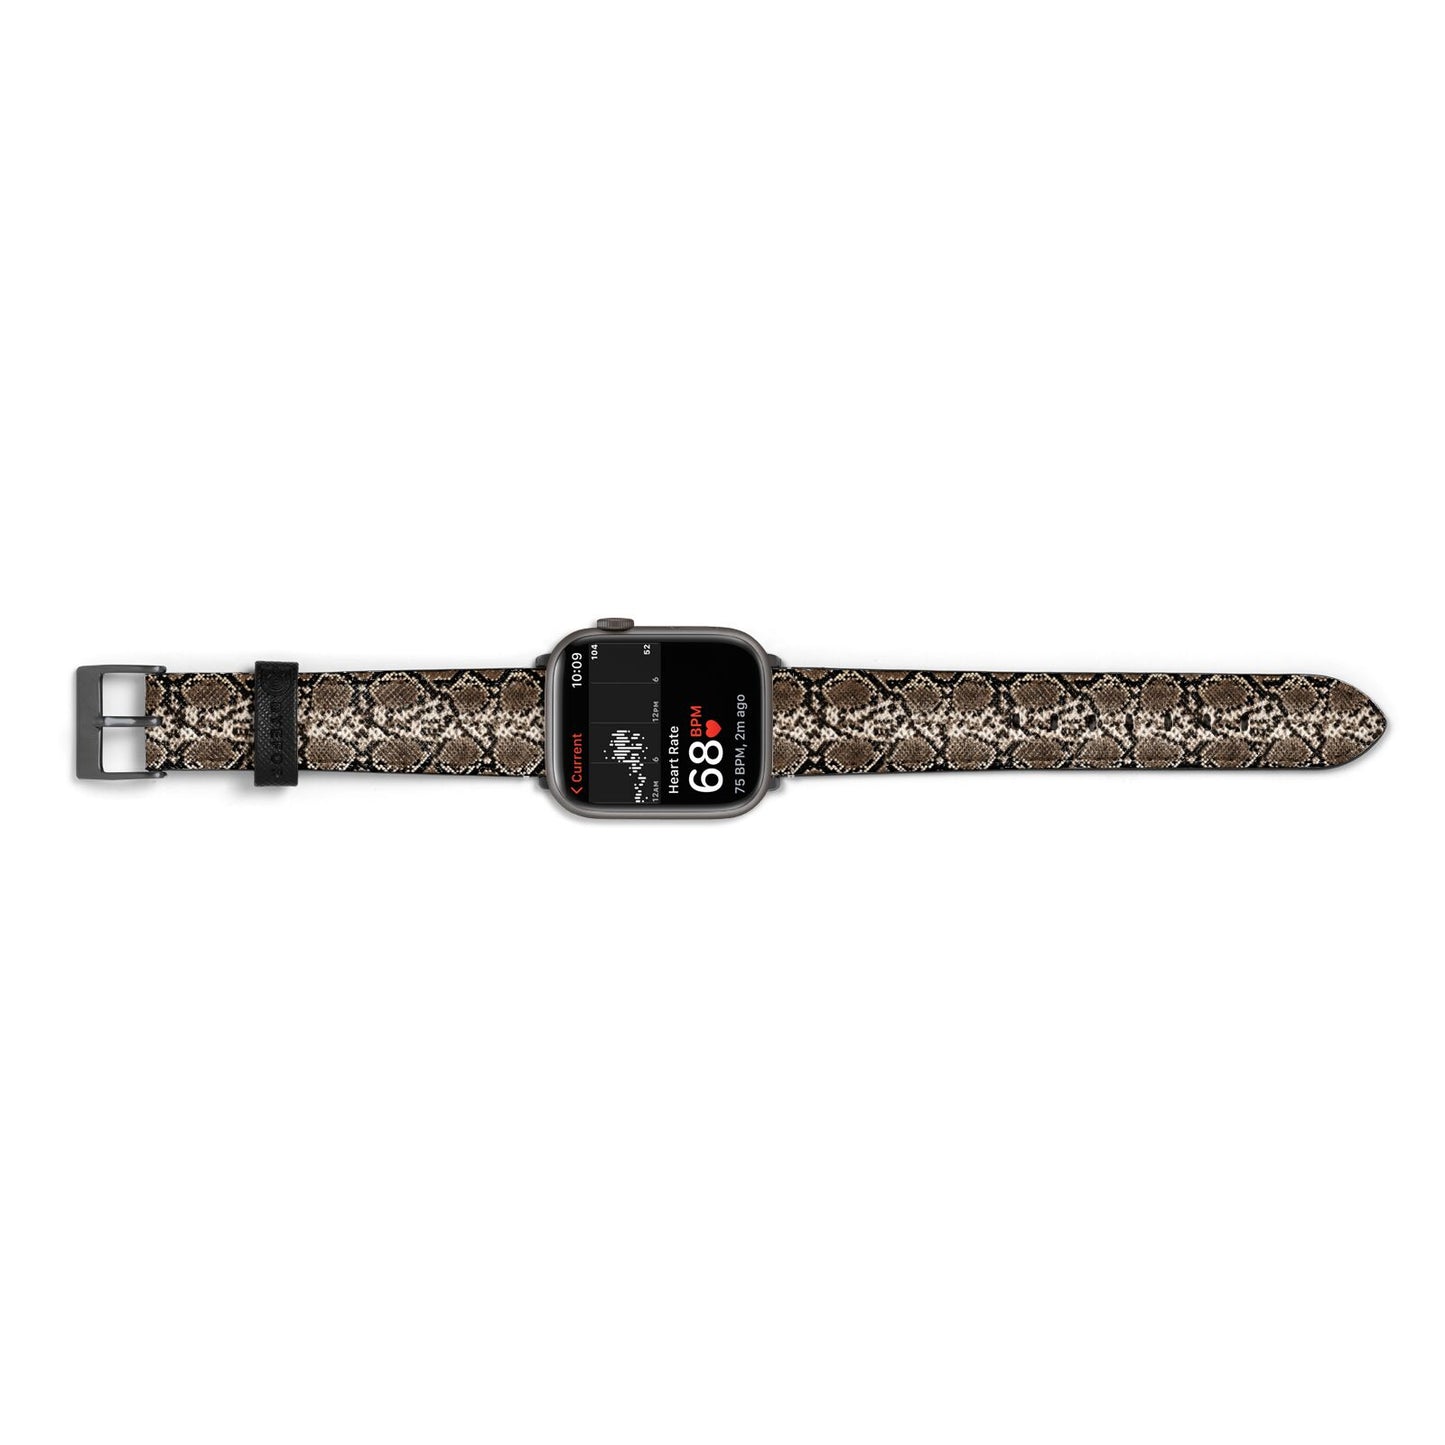 Snakeskin Pattern Apple Watch Strap Size 38mm Landscape Image Space Grey Hardware